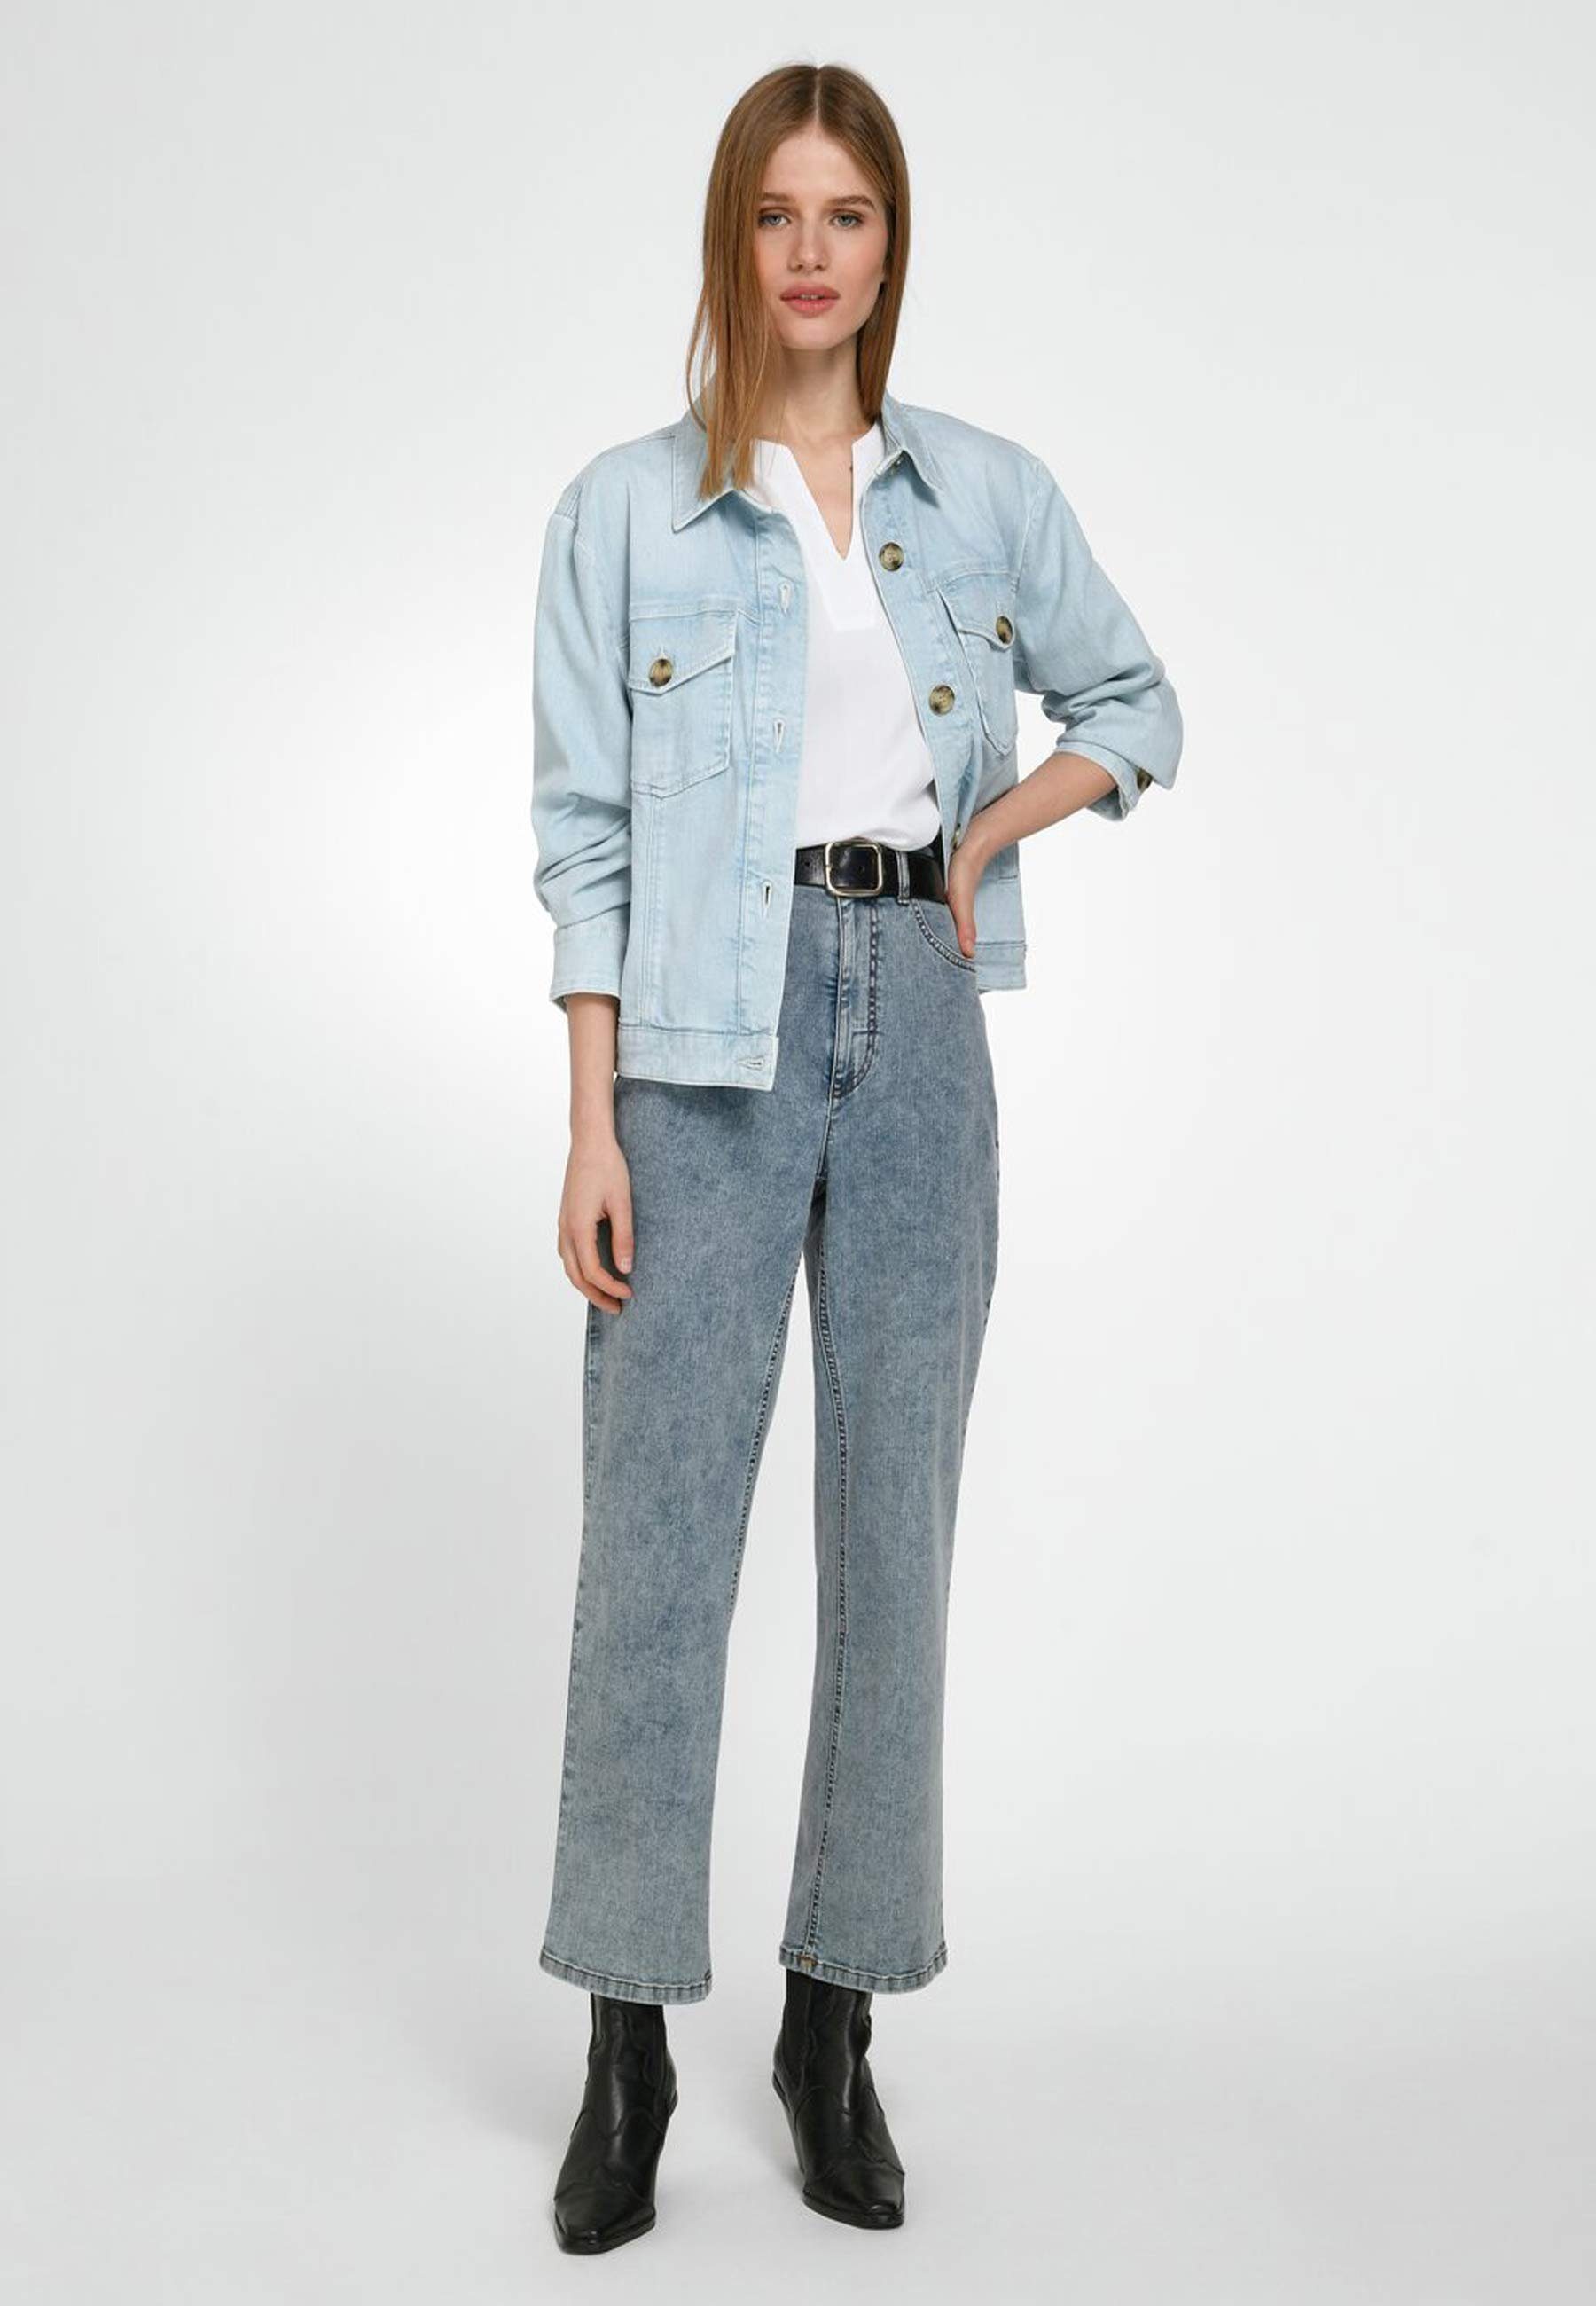 WALL London 5-Pocket-Jeans hellblau modernem Design mit Cotton